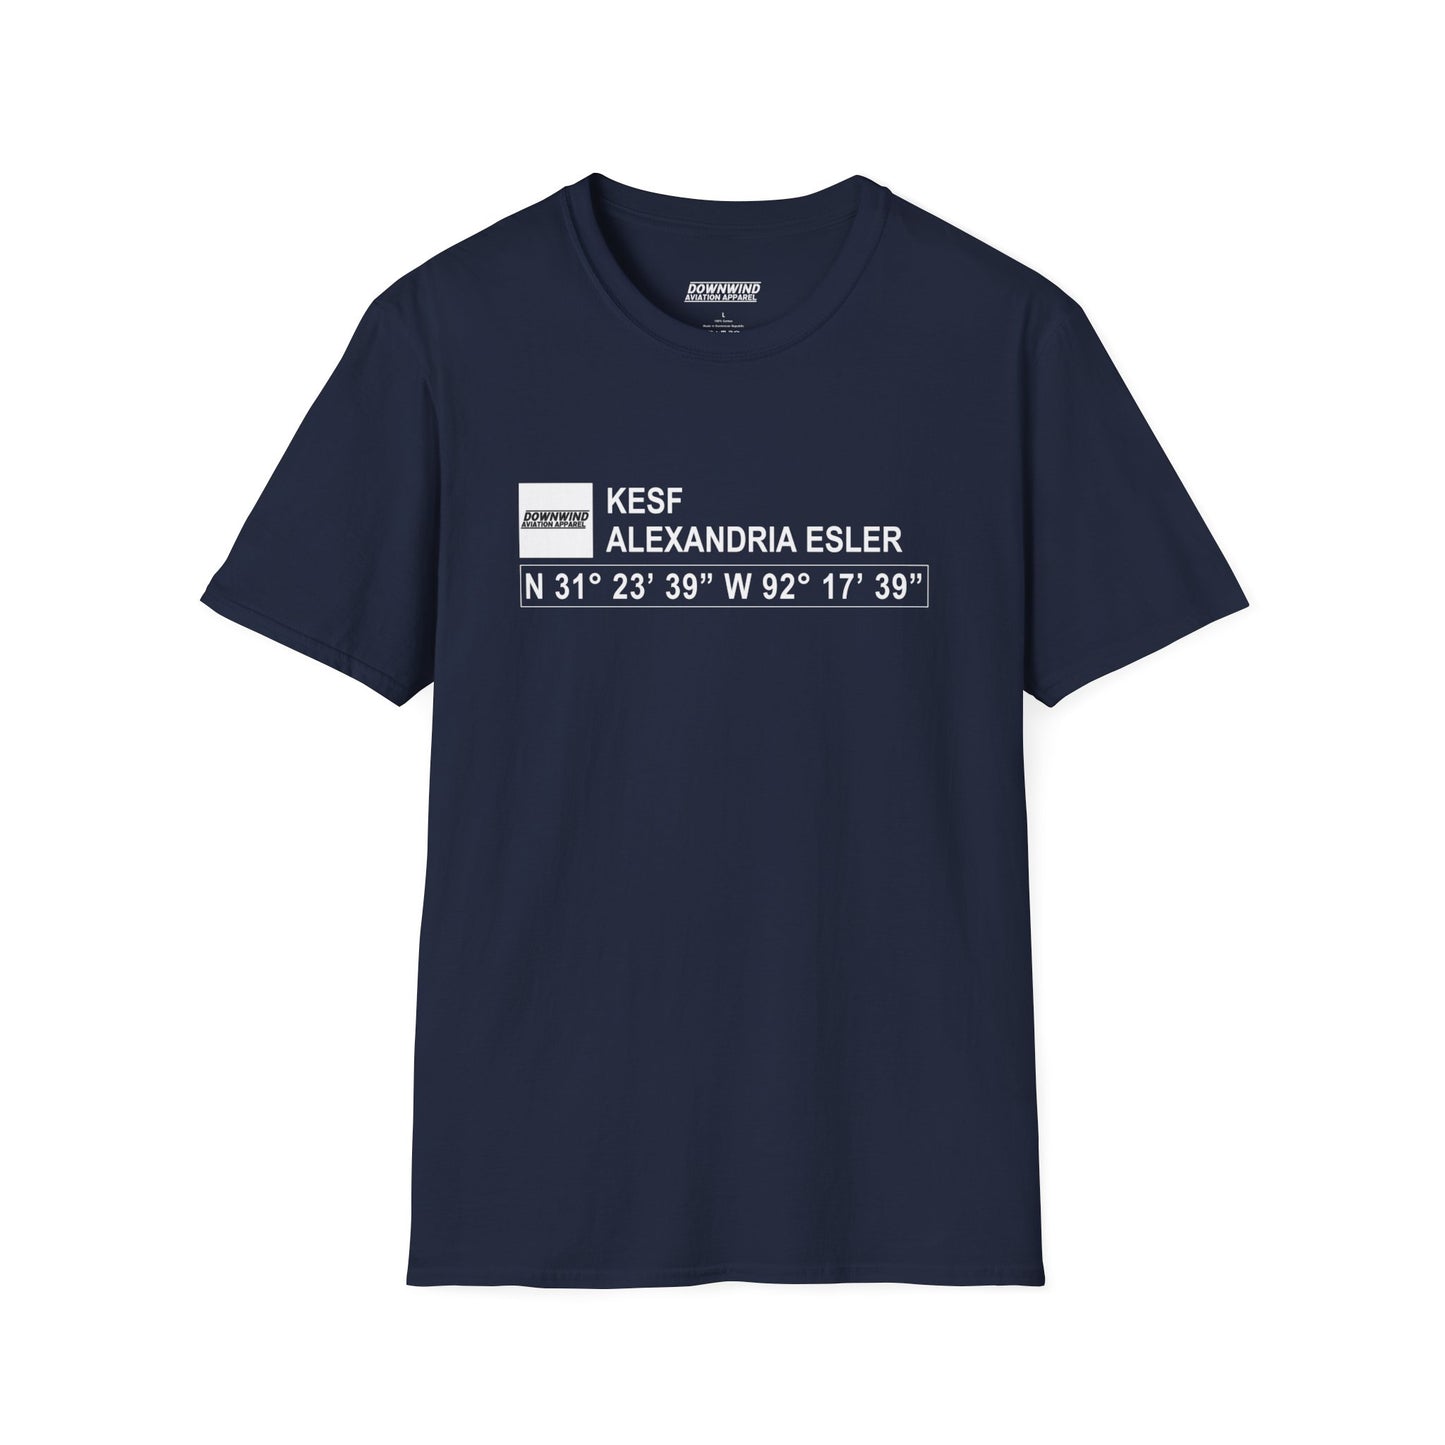 KESF / Alexandria Esler T-Shirt